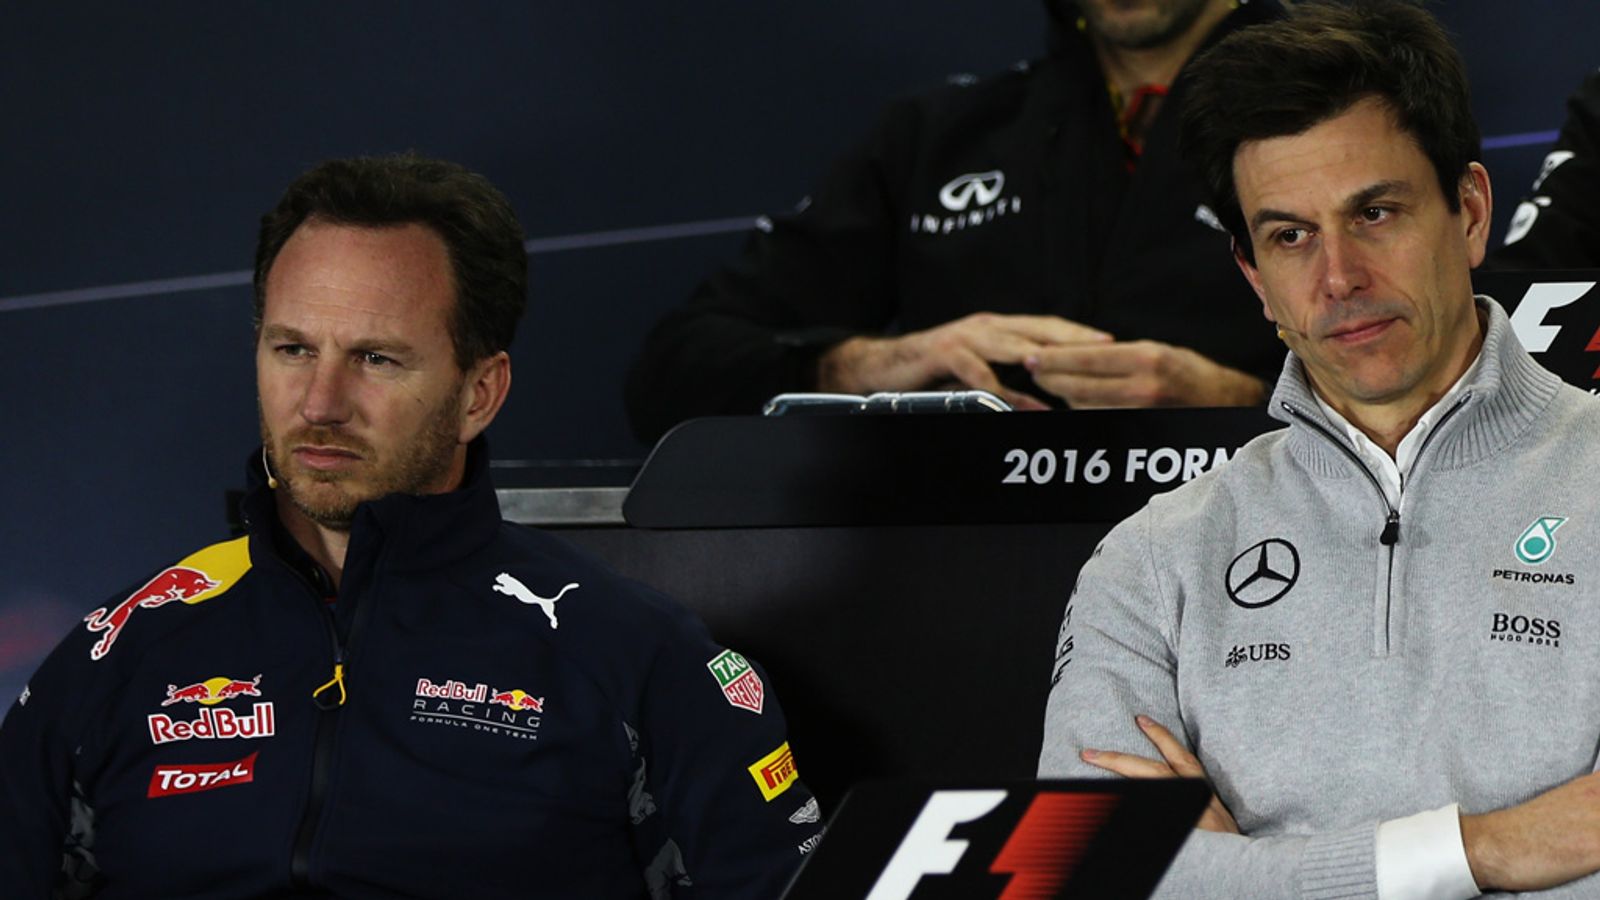 Christian Horner sends a message of concern over team radio | F1 News